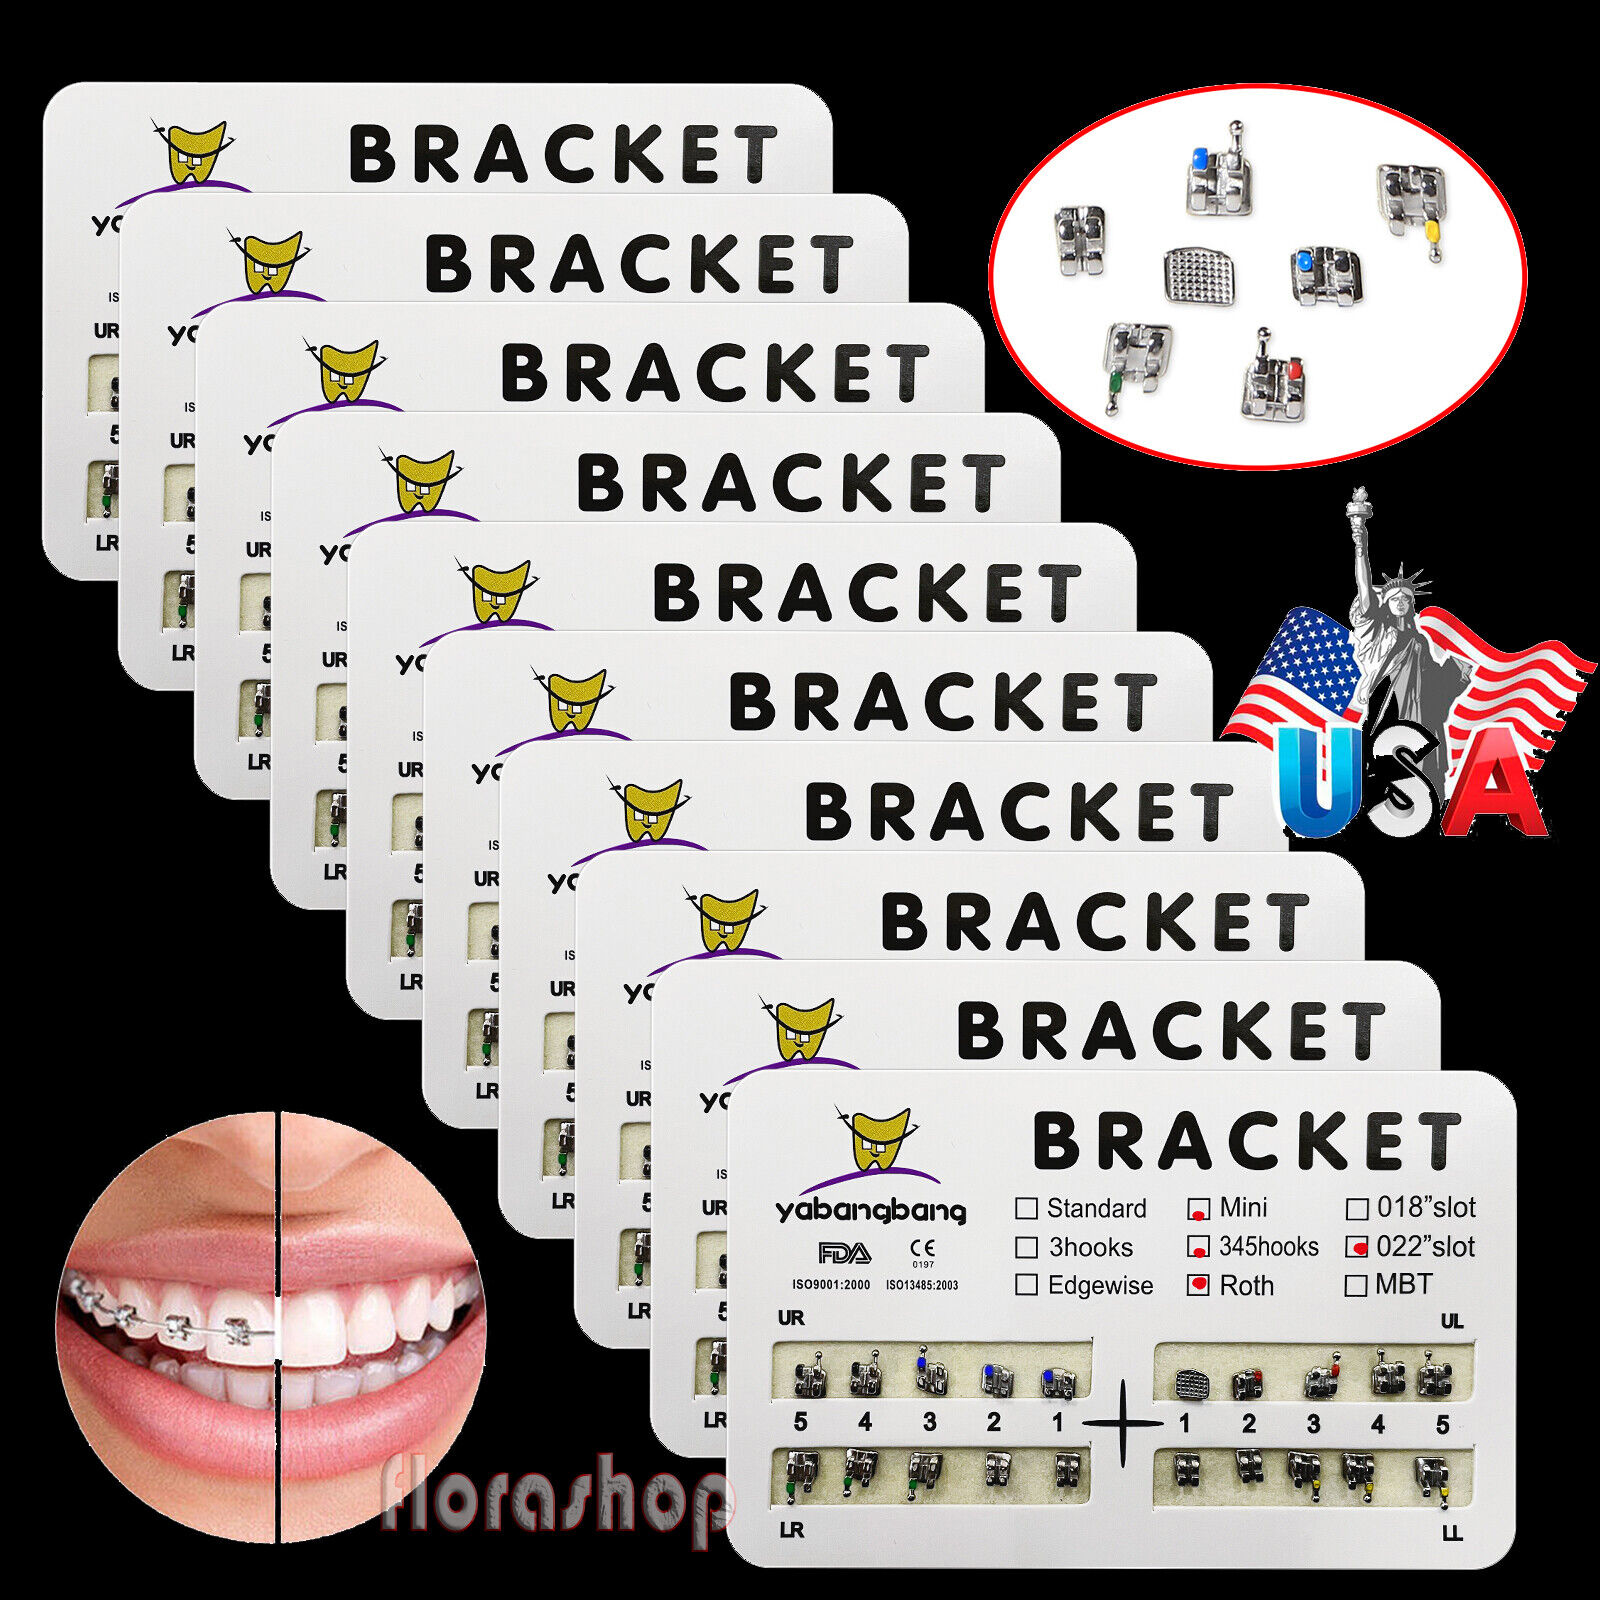 10 packs Dental Orthodontic Brackets Braces Mini Roth Slot 022 345 Hook #2 200PC Yabangbang Does Not Apply - фотография #18